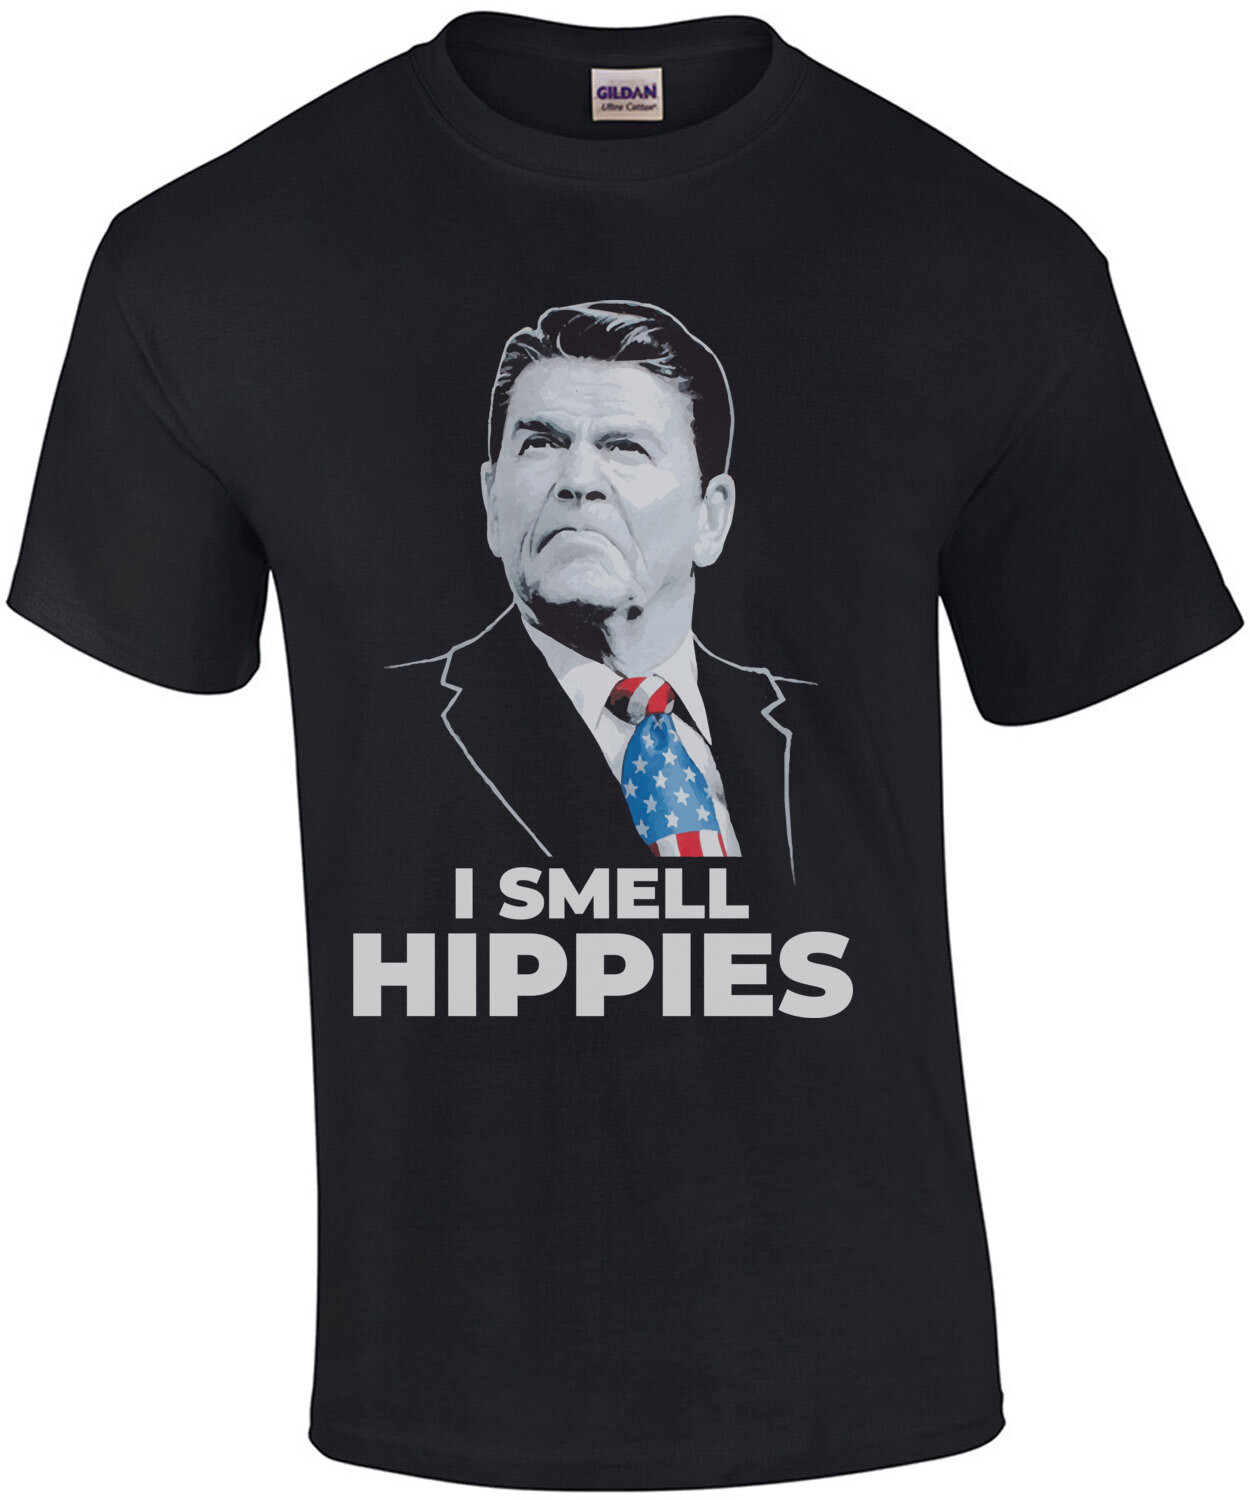 I smell hippies - Ronald Reagan T-Shirt